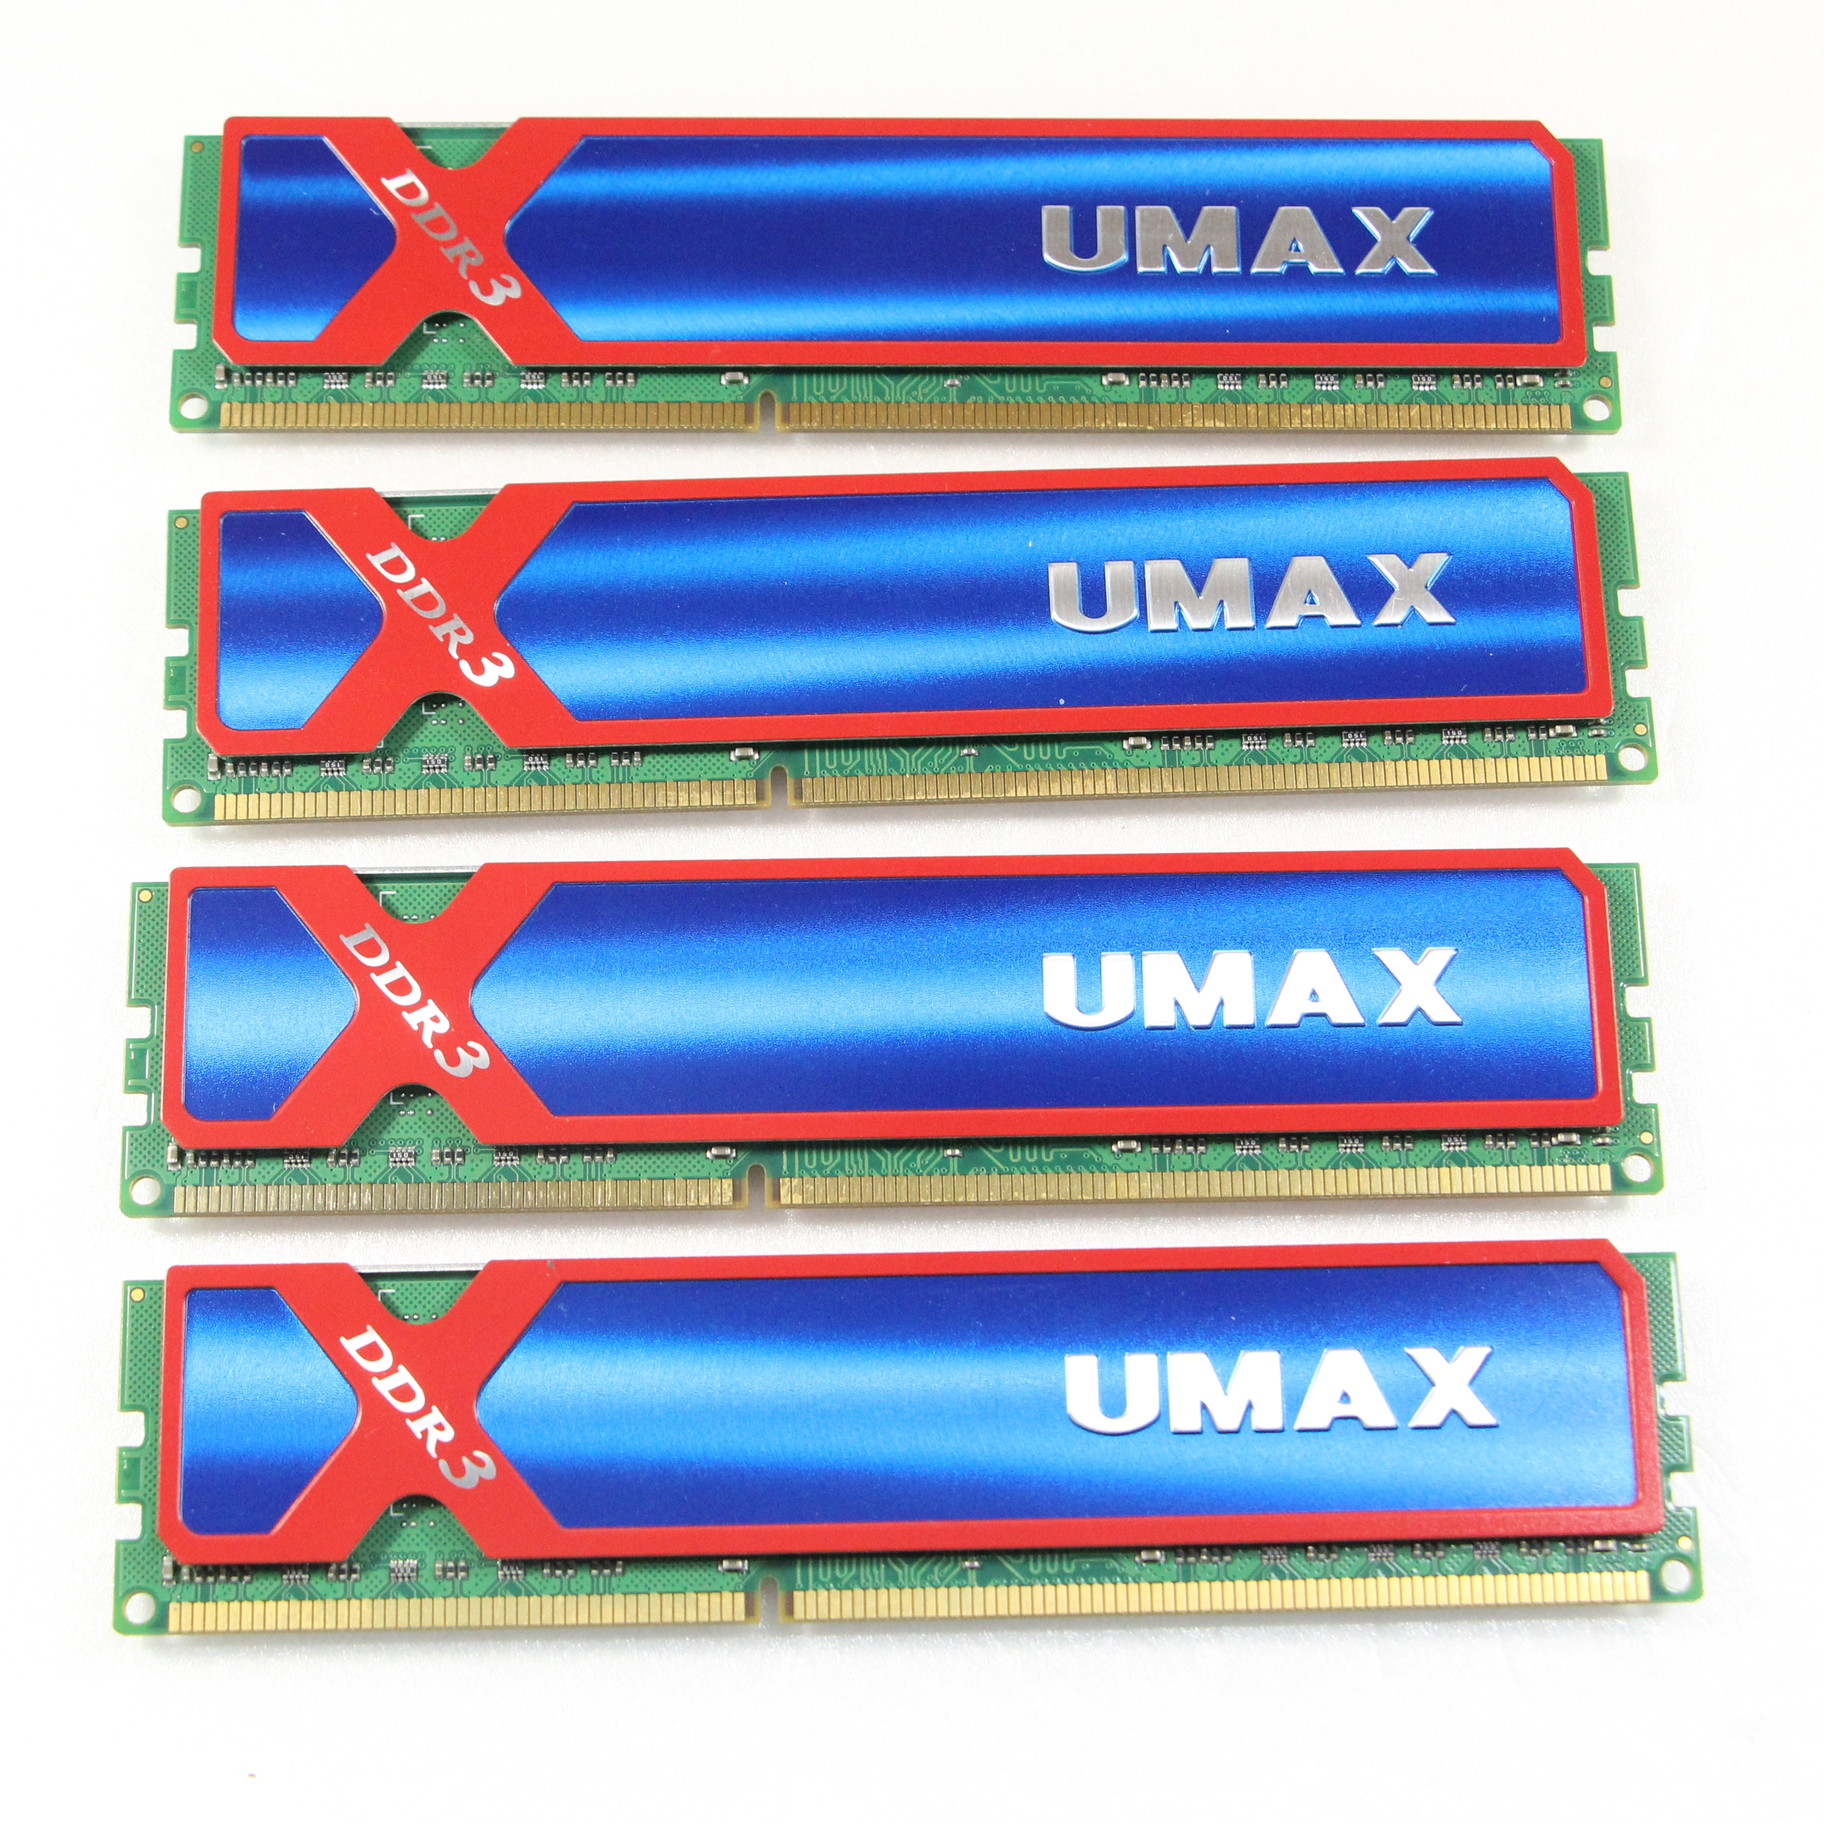 UMAX QCD3-16GB-1600OC (DDR3 4GB×4 計16GB)